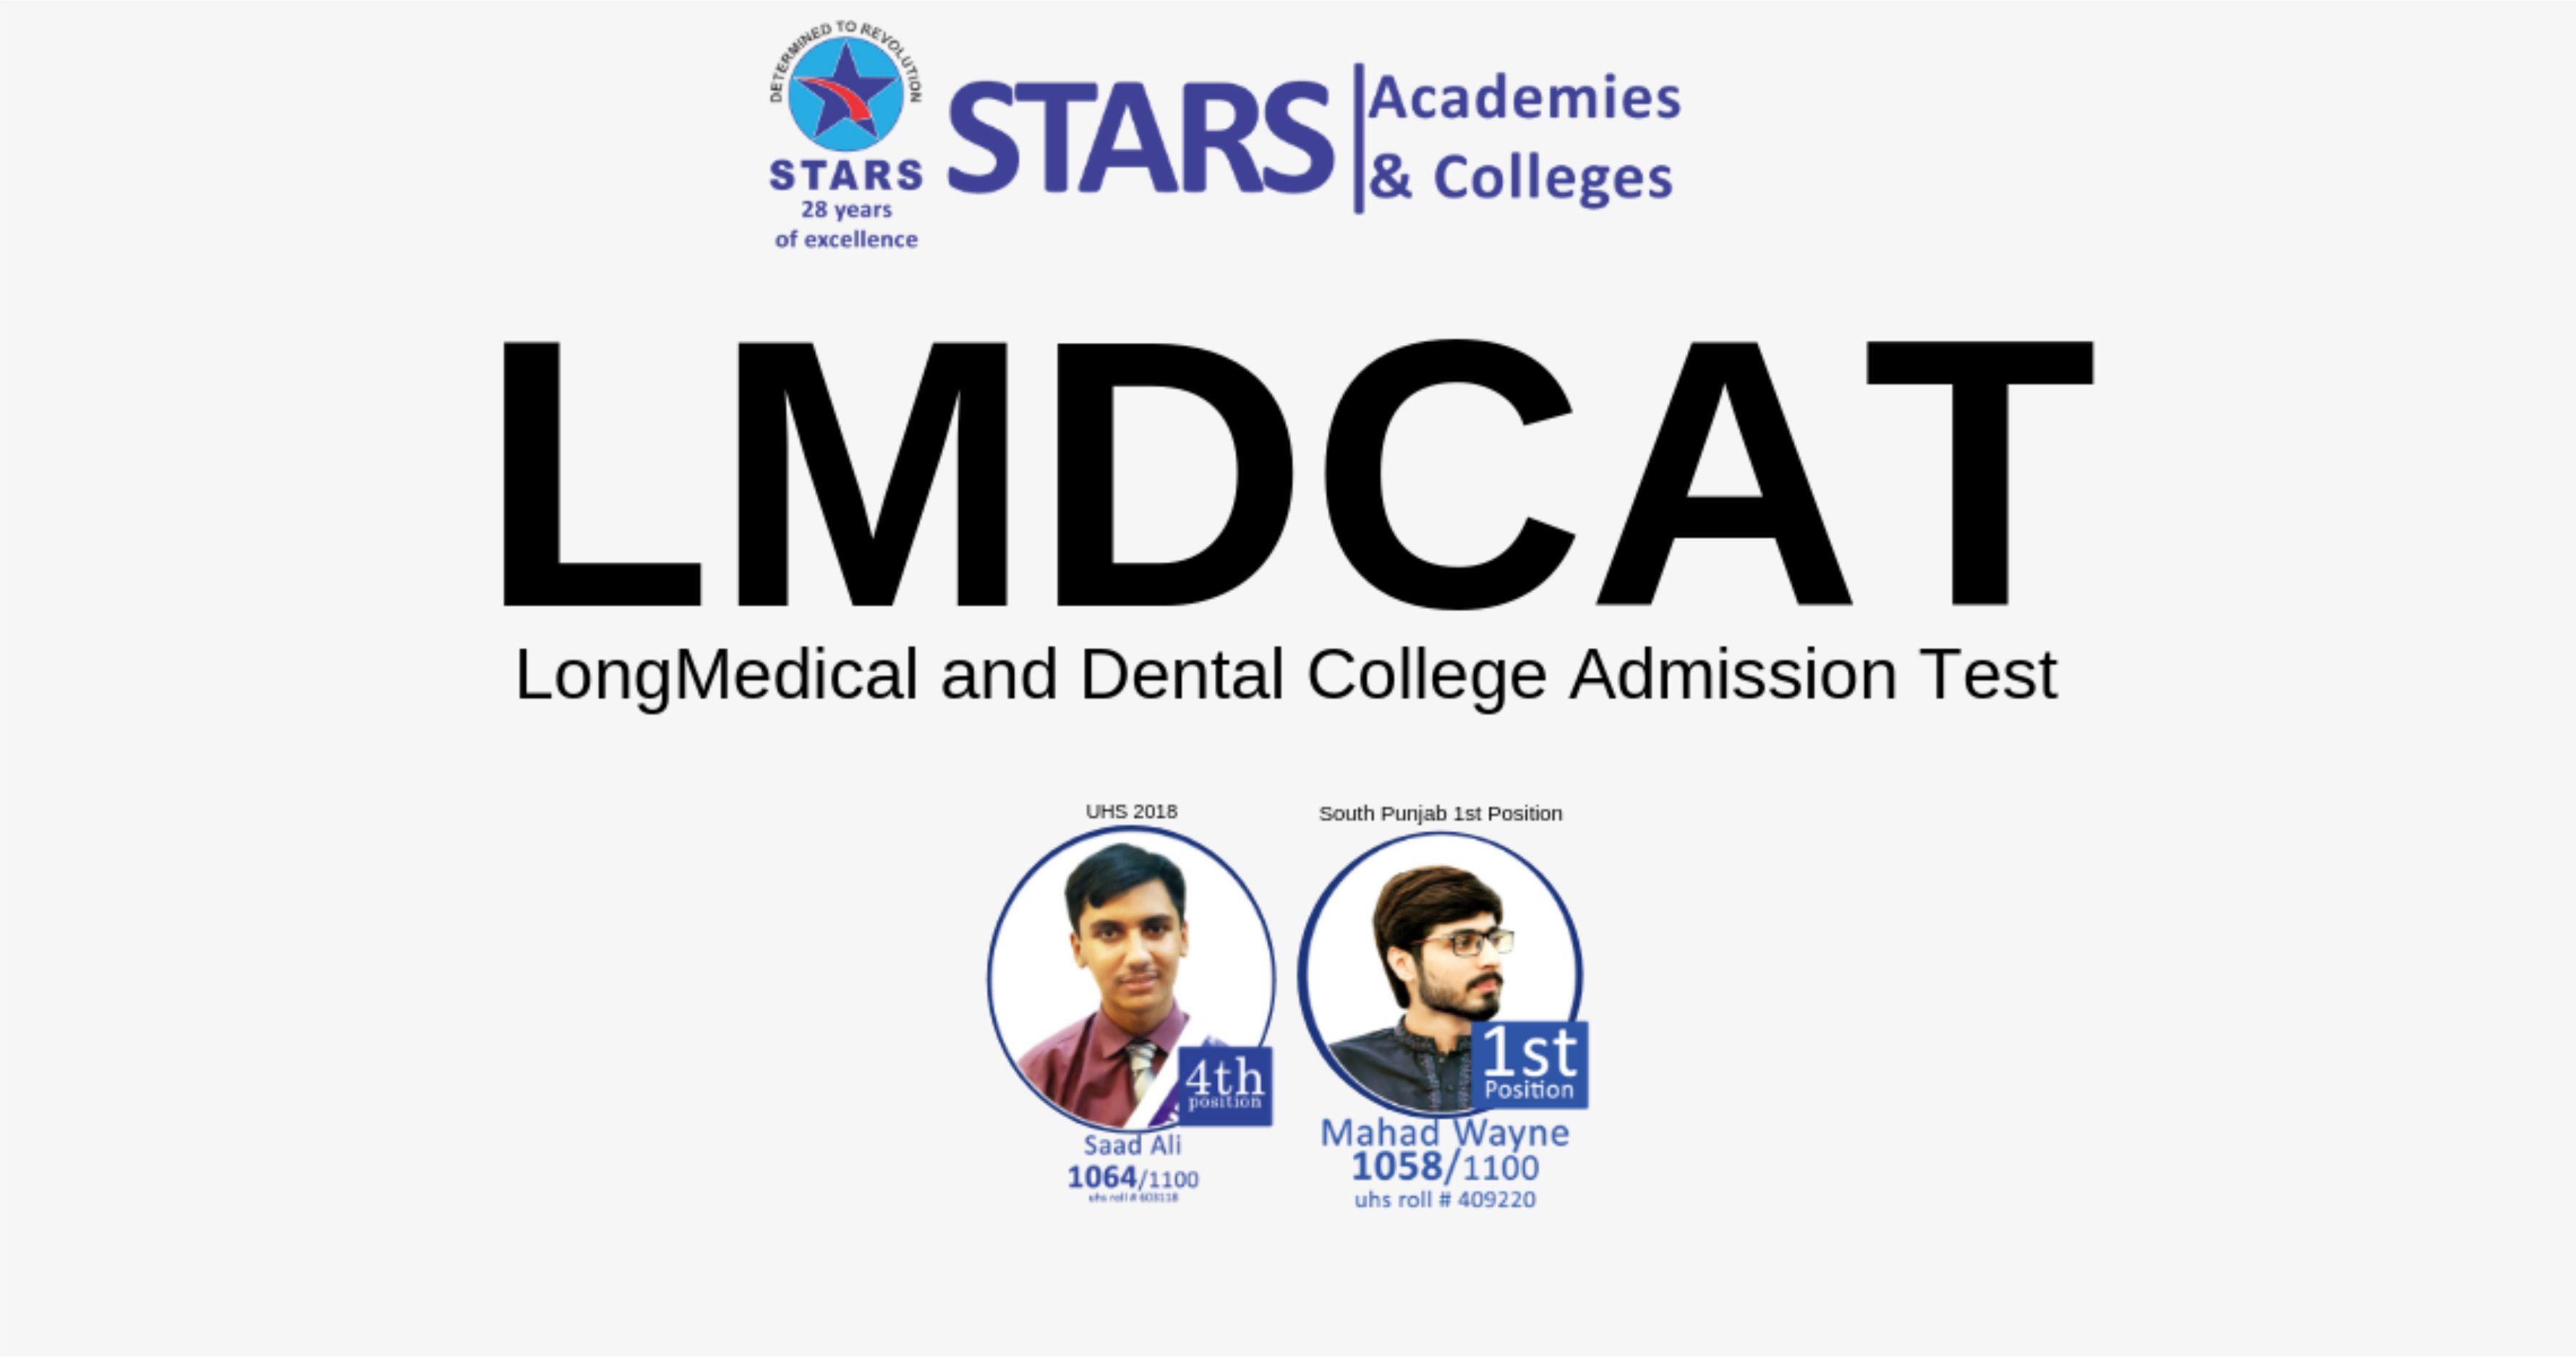 Stars Academy LMDCAT Information